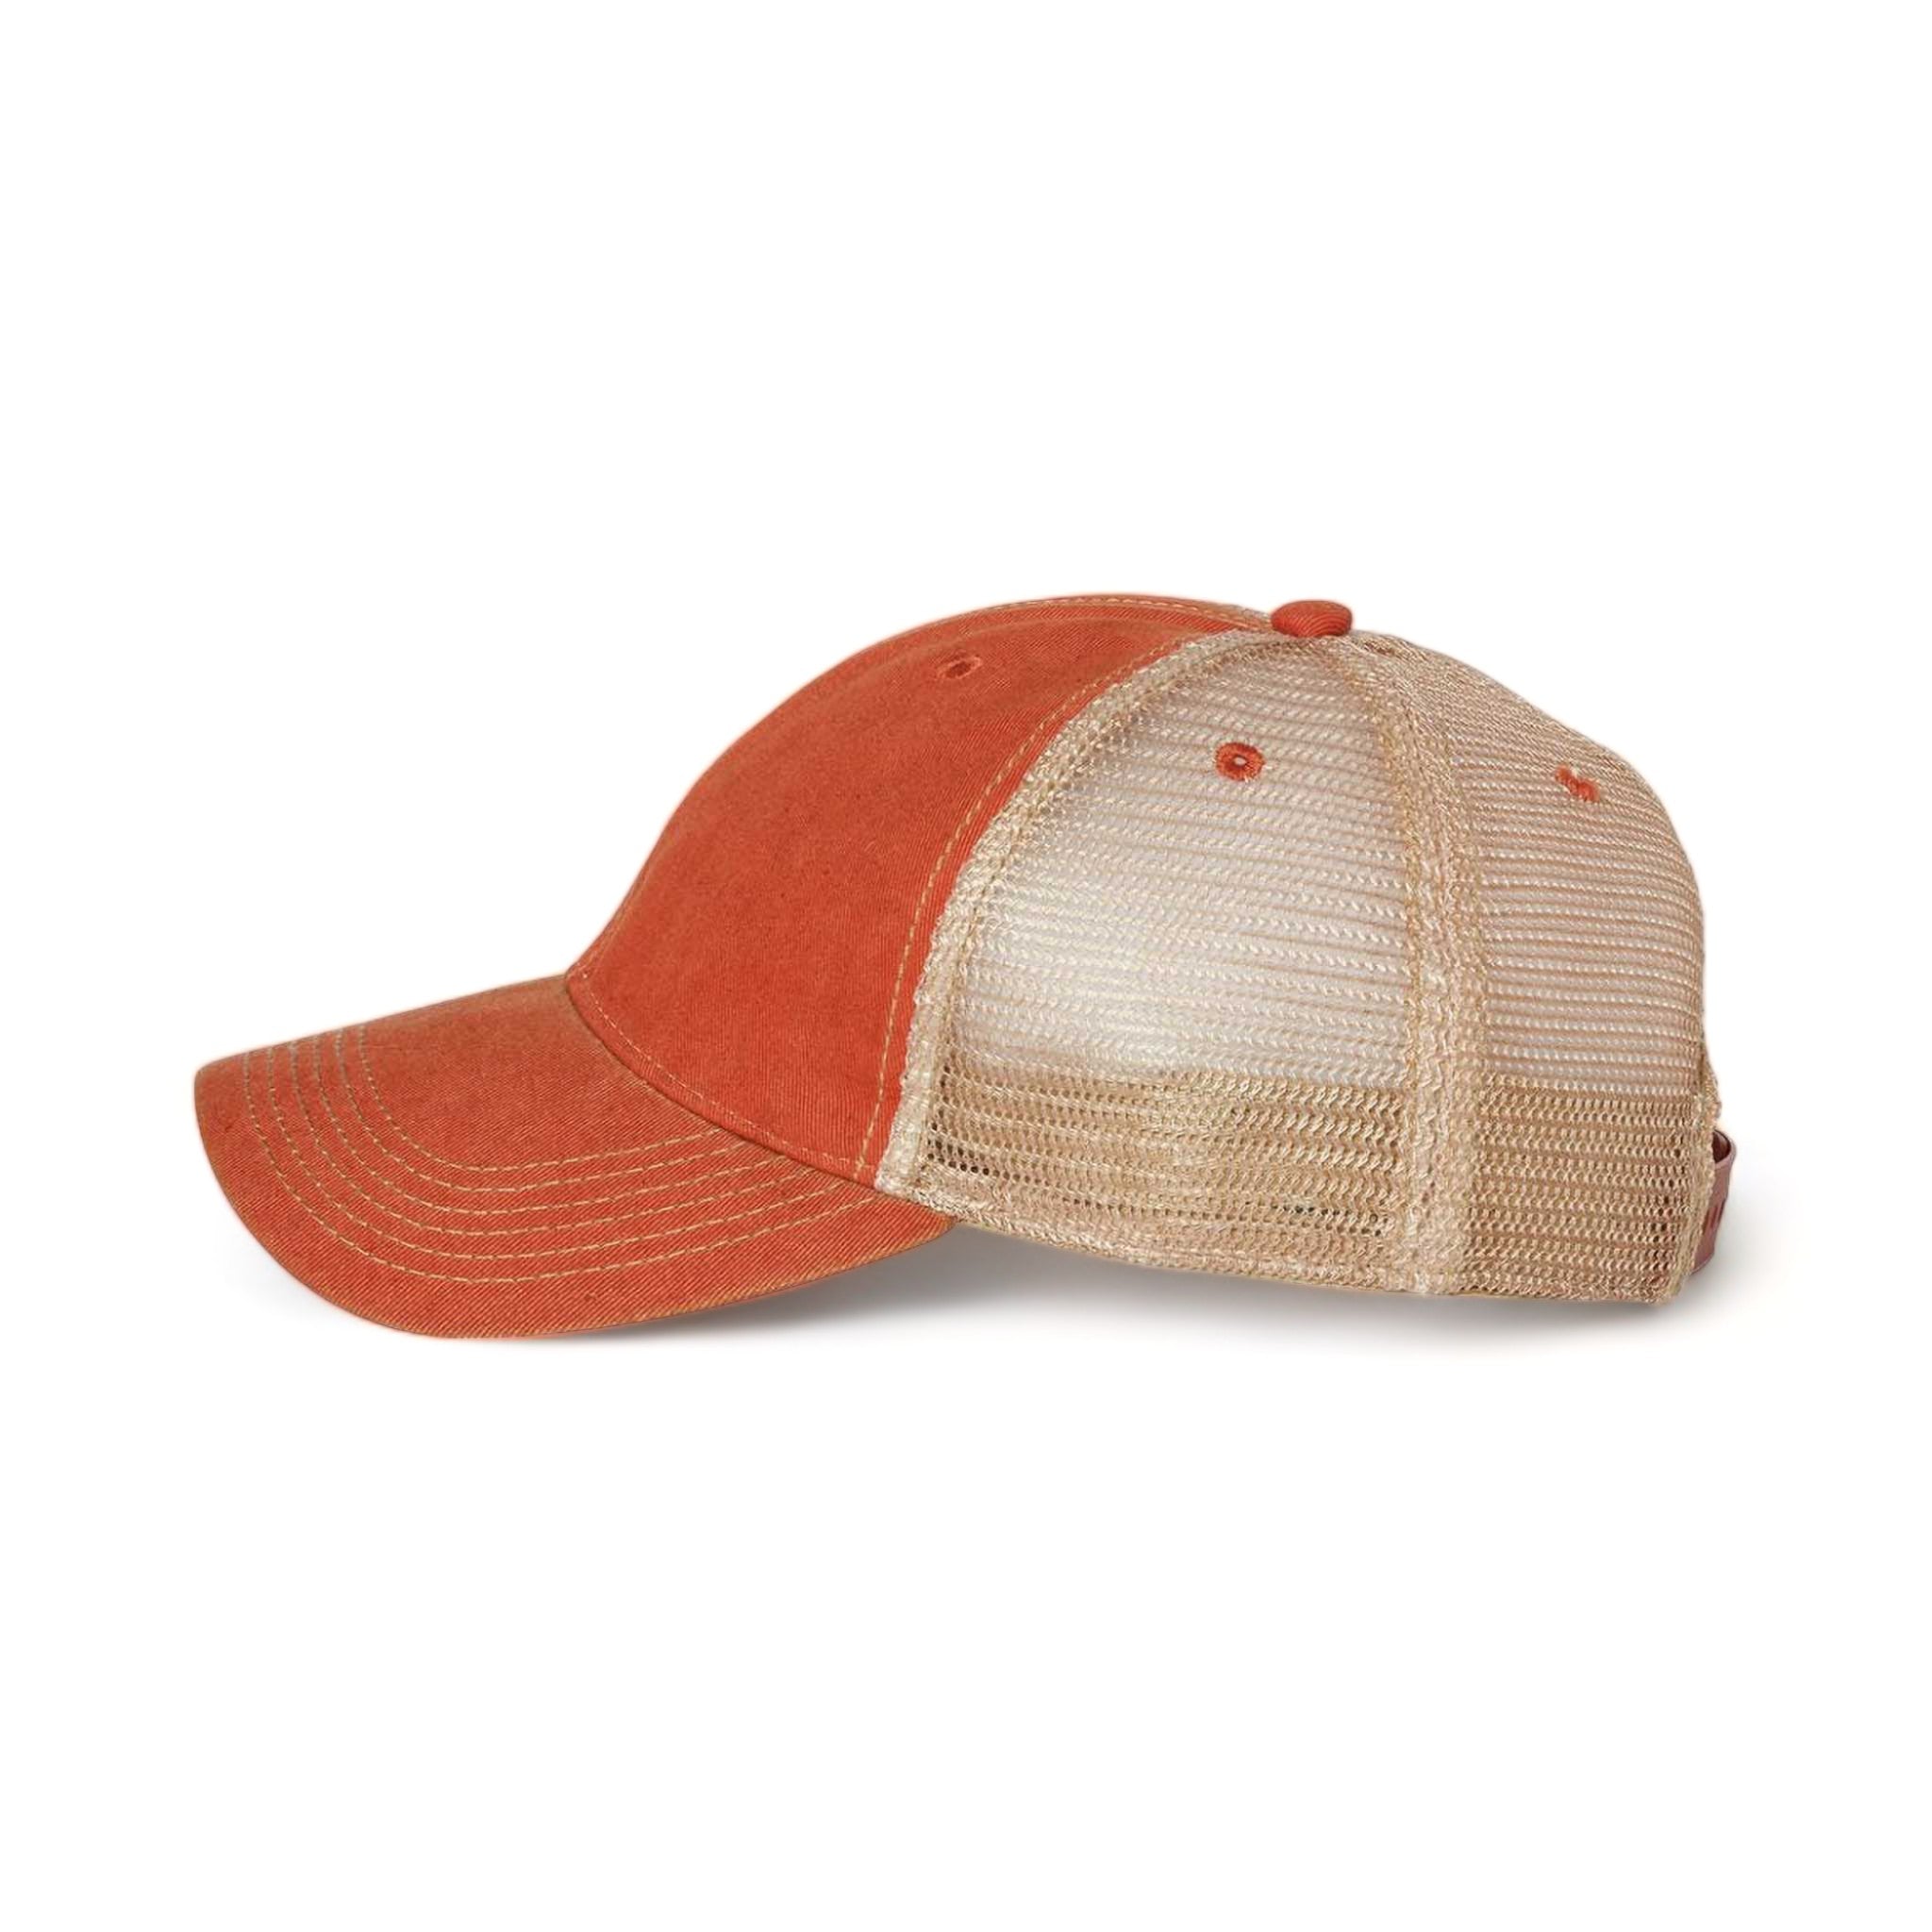 Side view of LEGACY OFA custom hat in orange and khaki